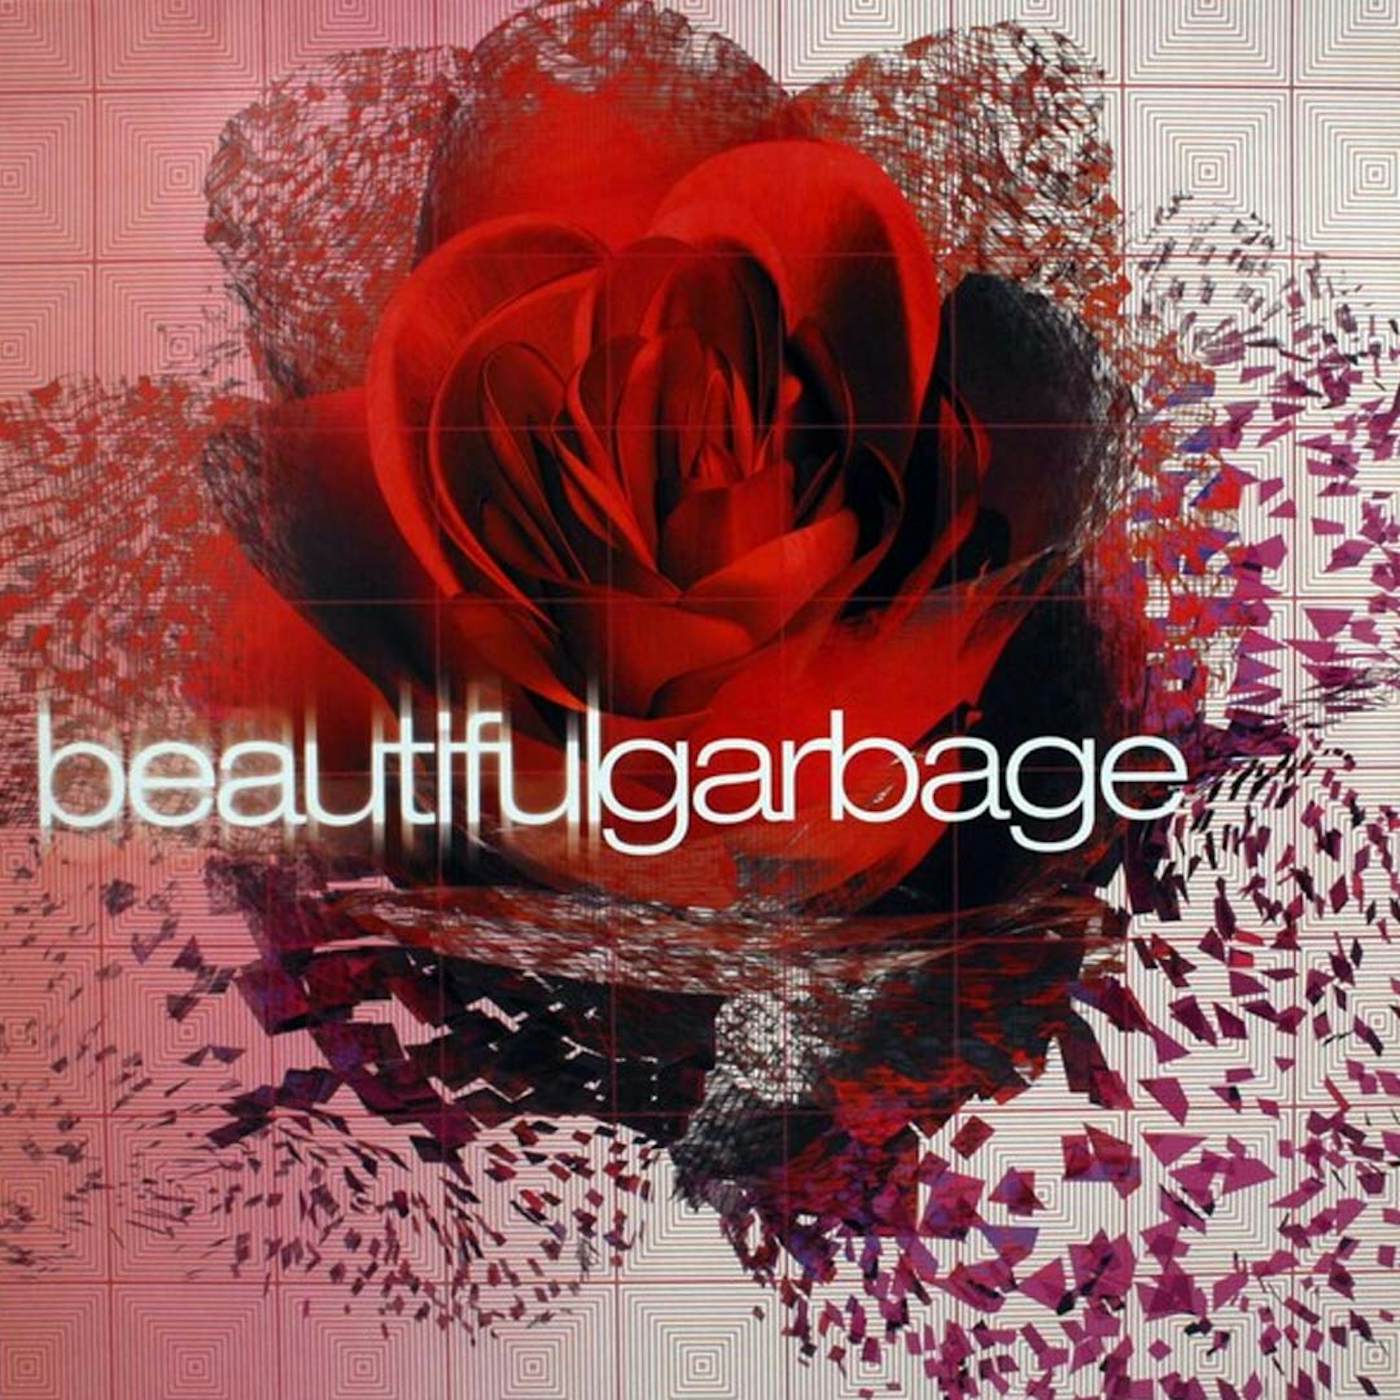 Garbage LP Vinyl Record - Beautiful Garbage (20. 21 Remaster) (Deluxe Edition)